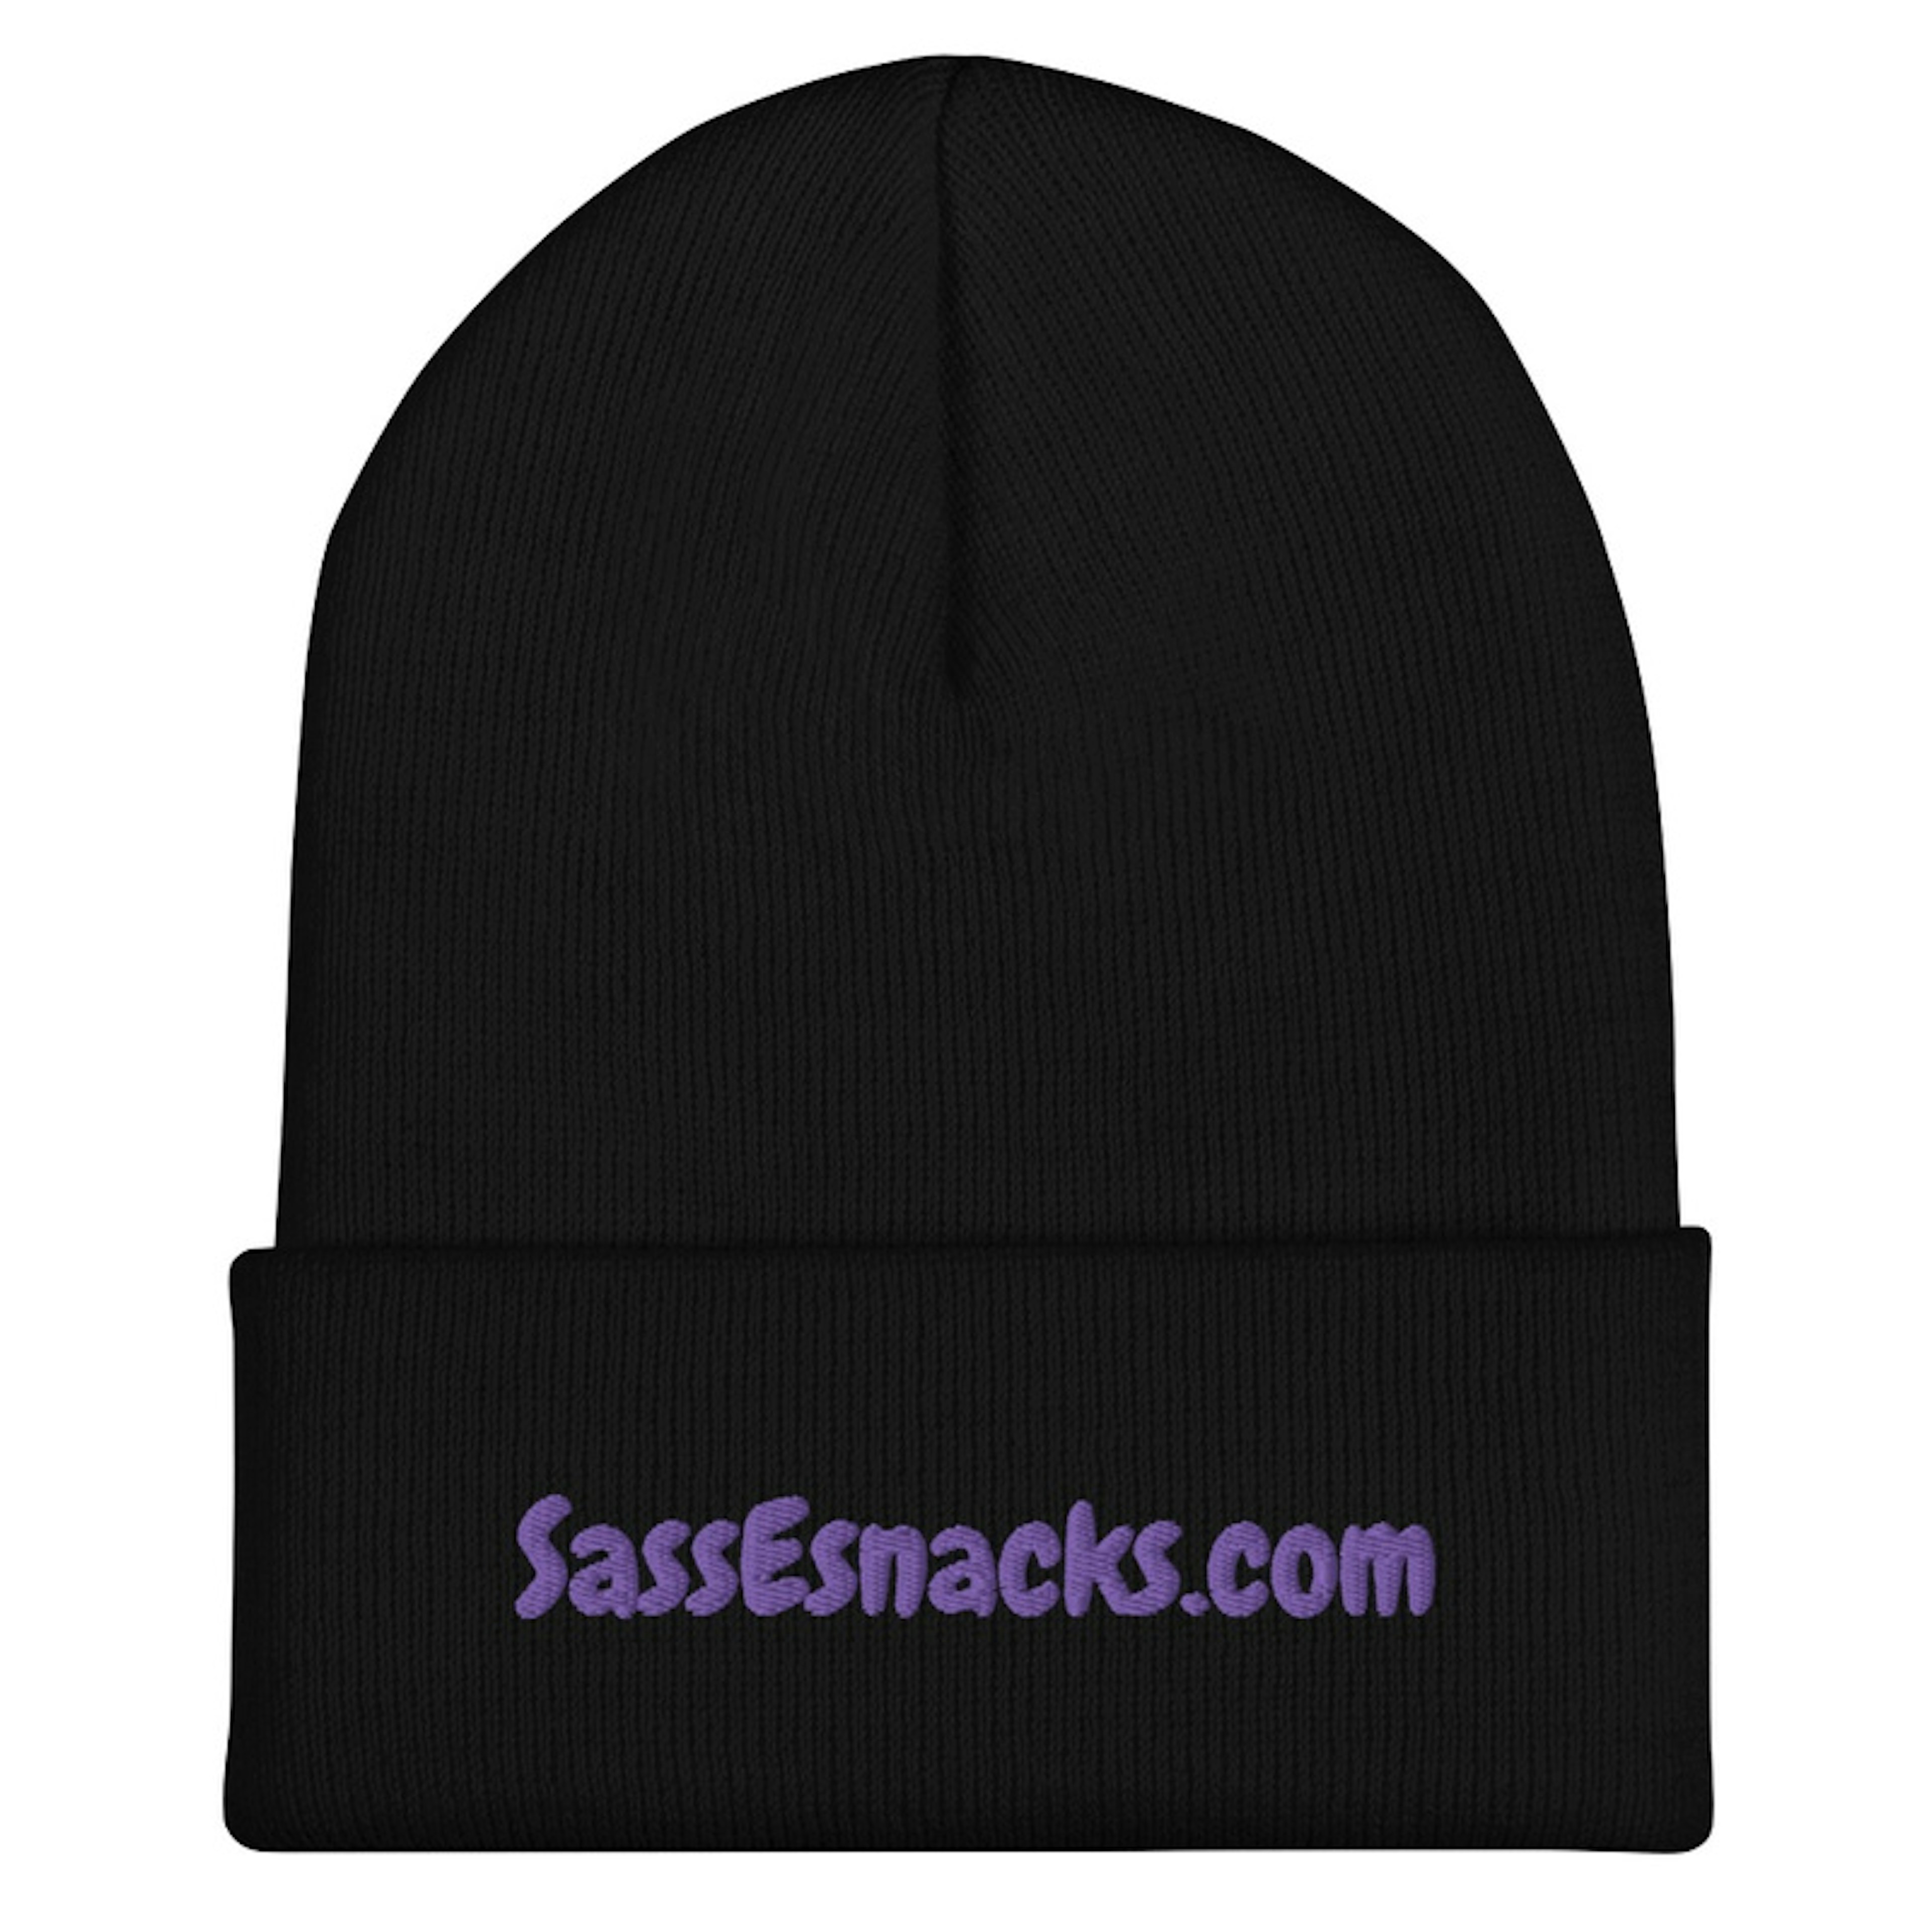 SassEsnacks.com Winter Hat